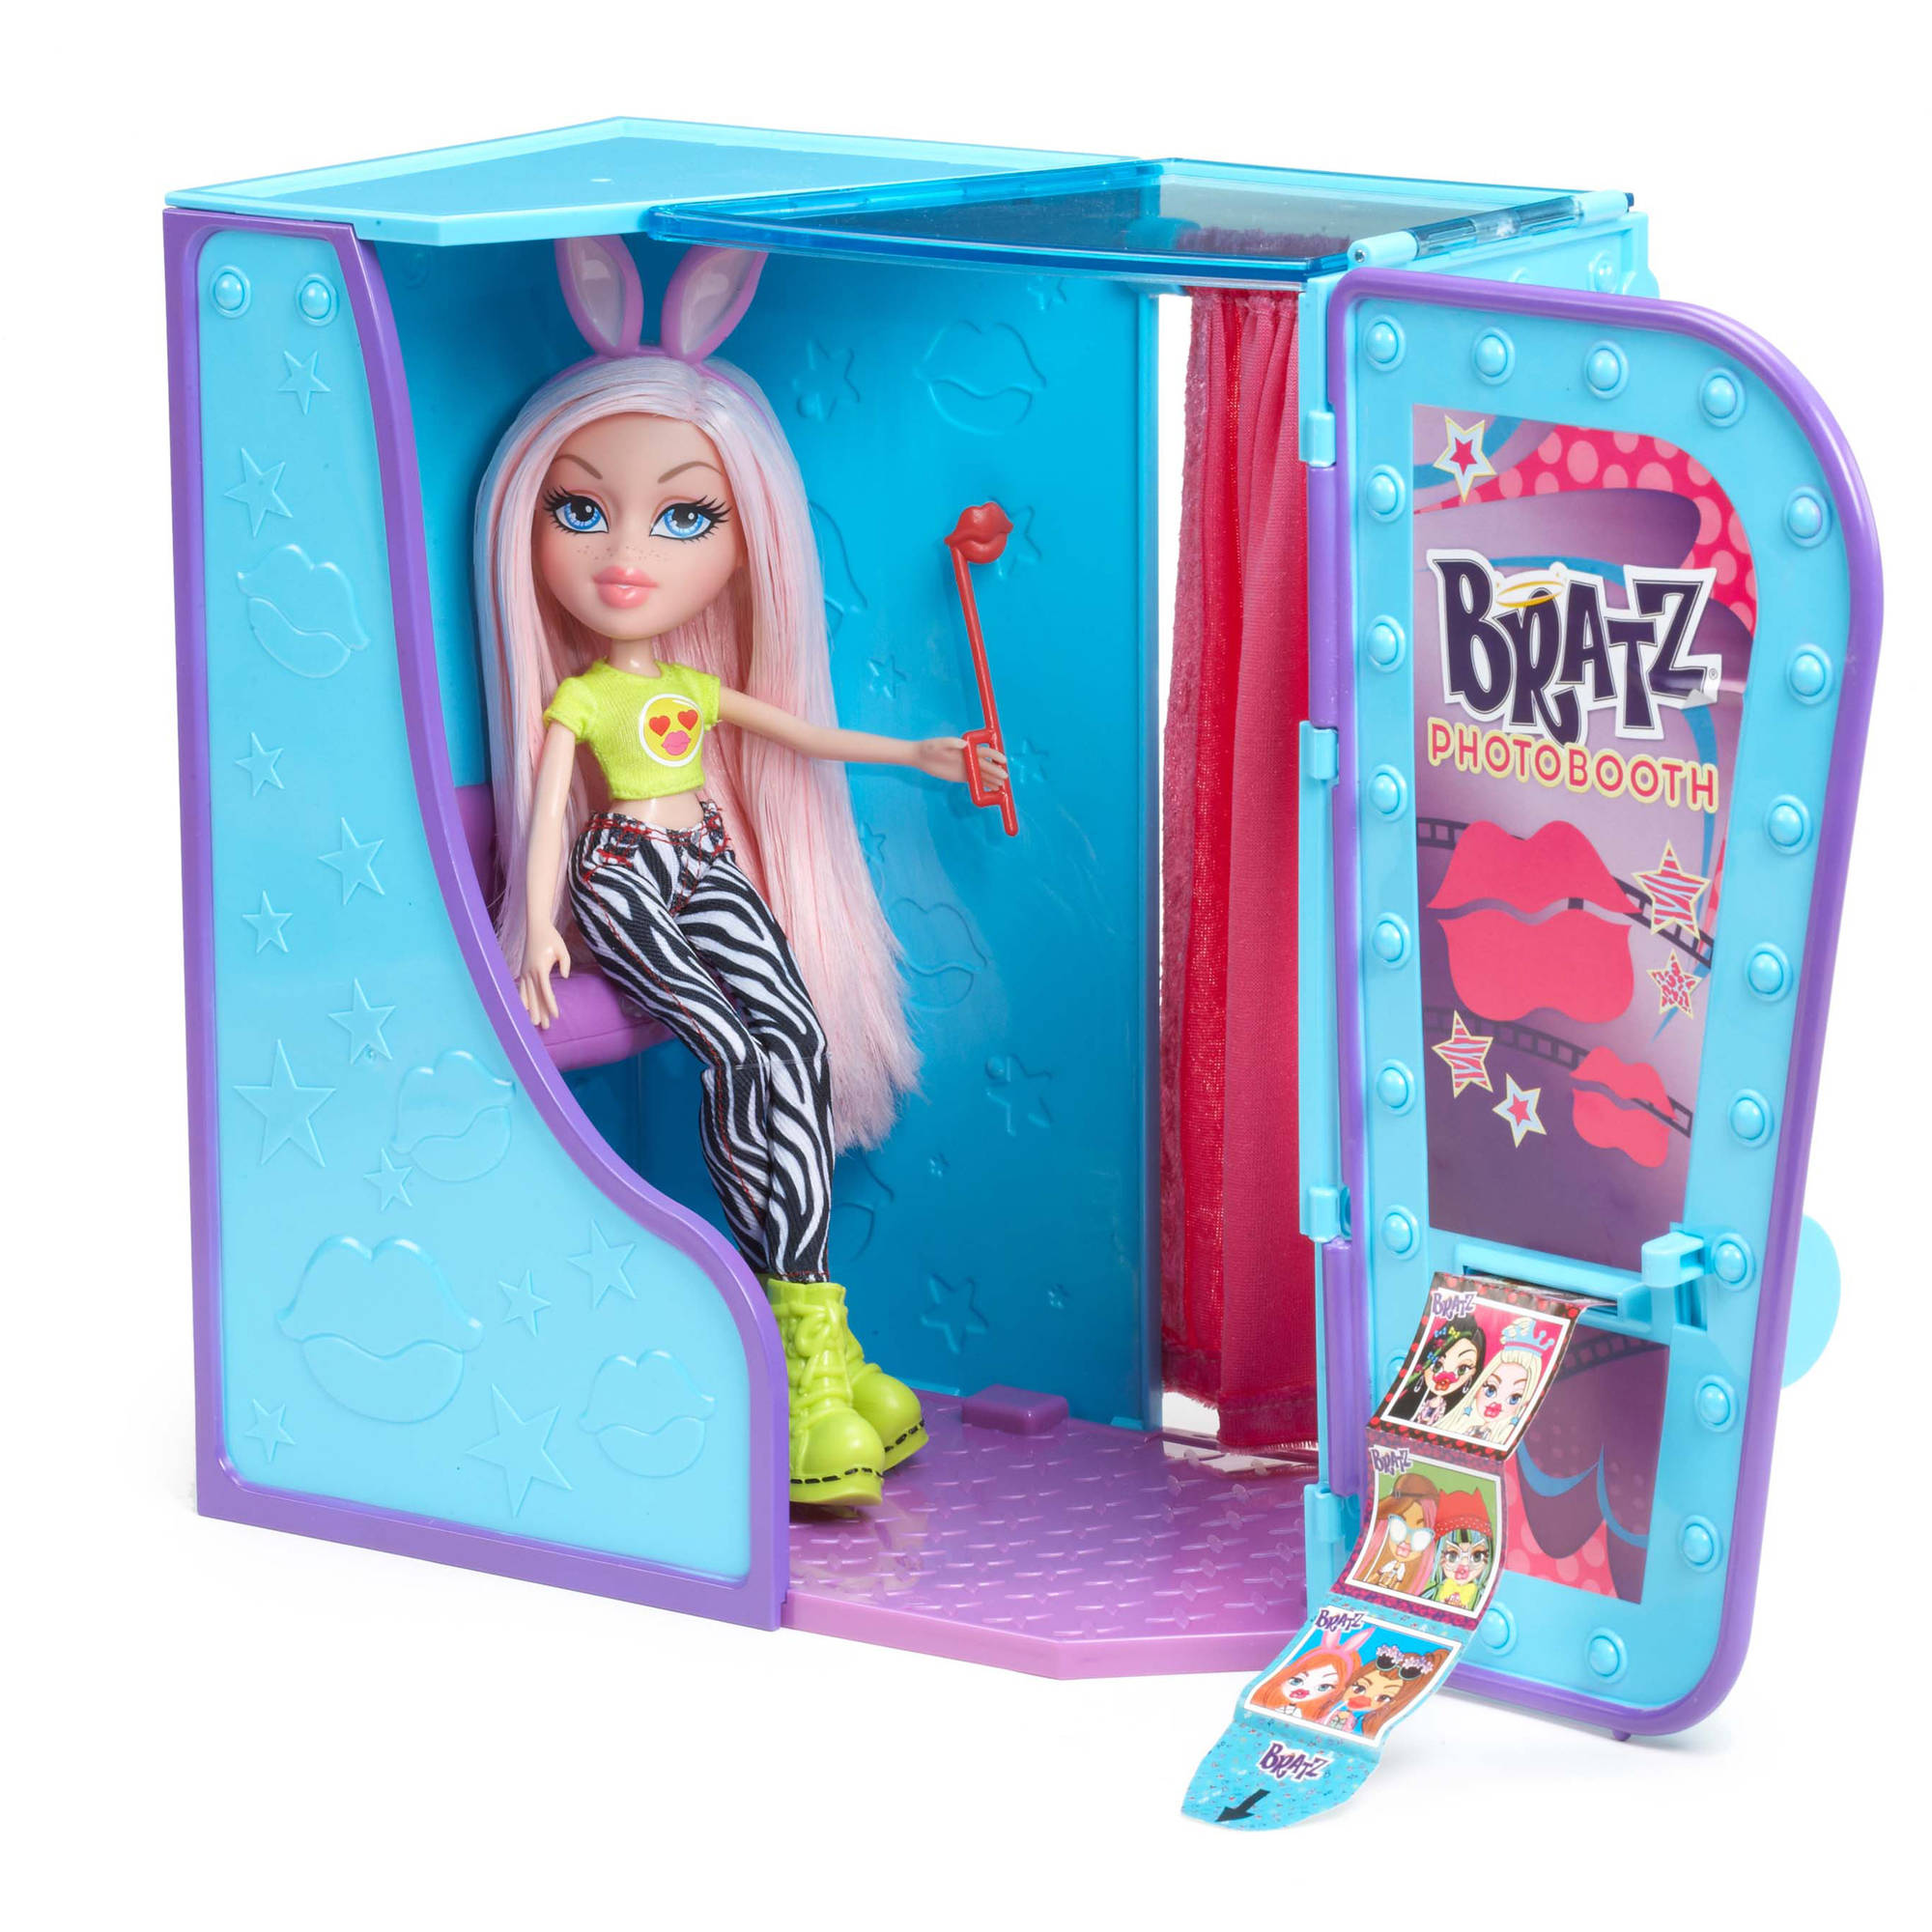 Bratz #SelfieSnaps Photobooth with Doll Only $15.97 (Reg. $50)